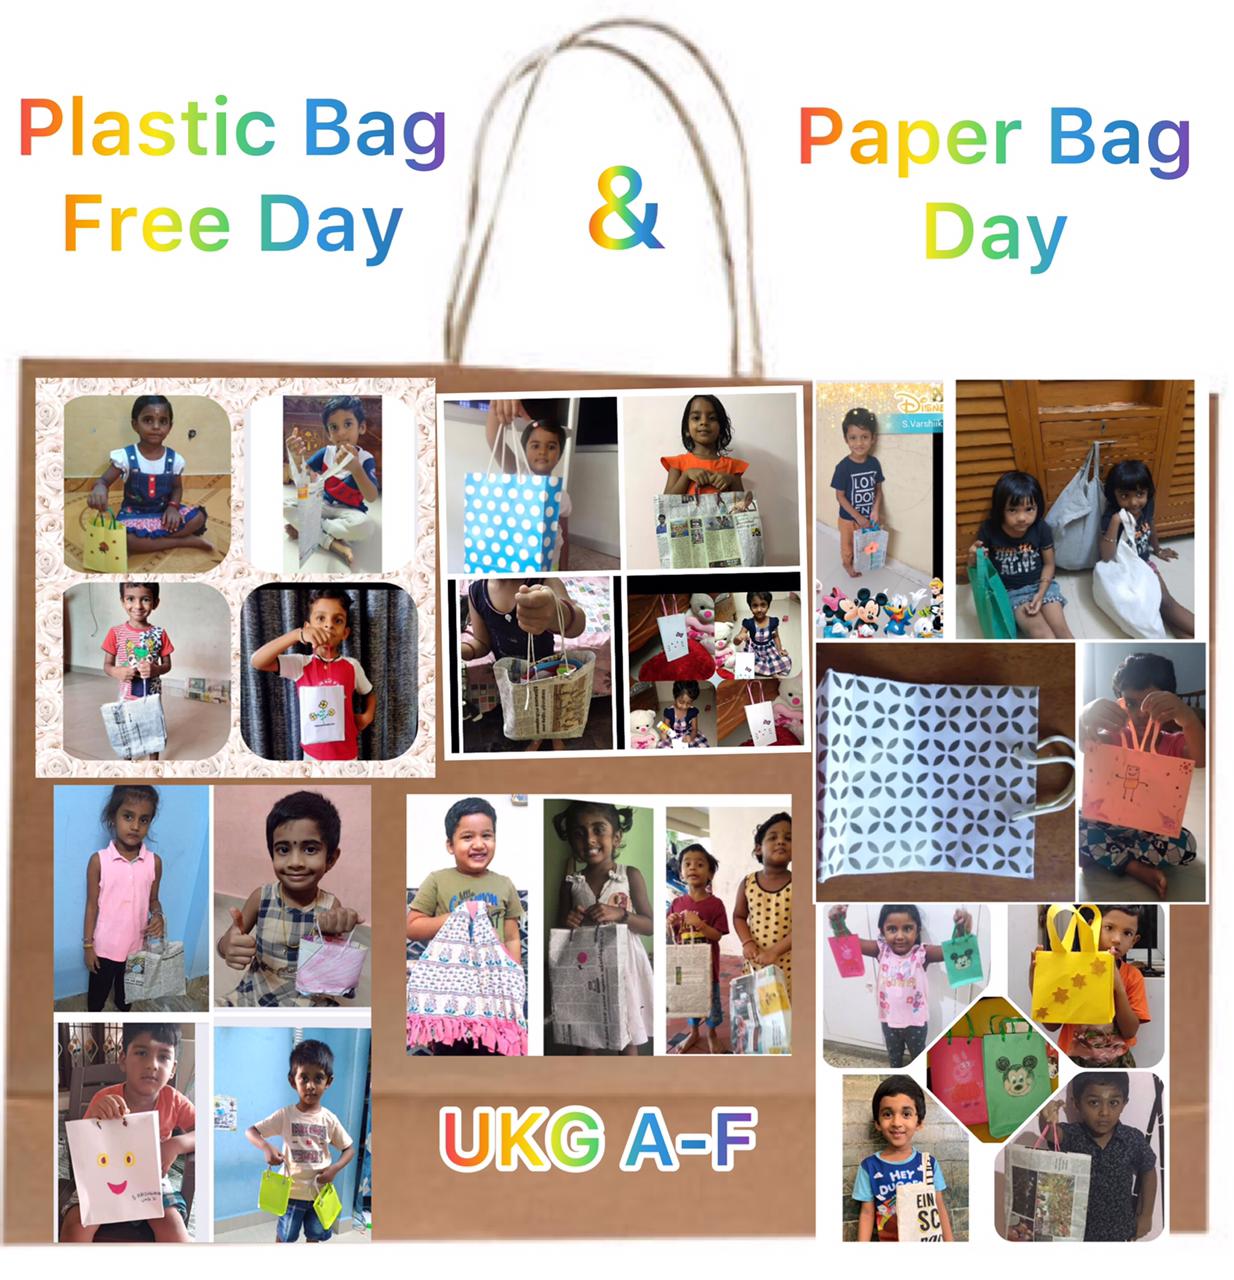 International Plastic Bag Free Day & Paper Bag Day celebration ...